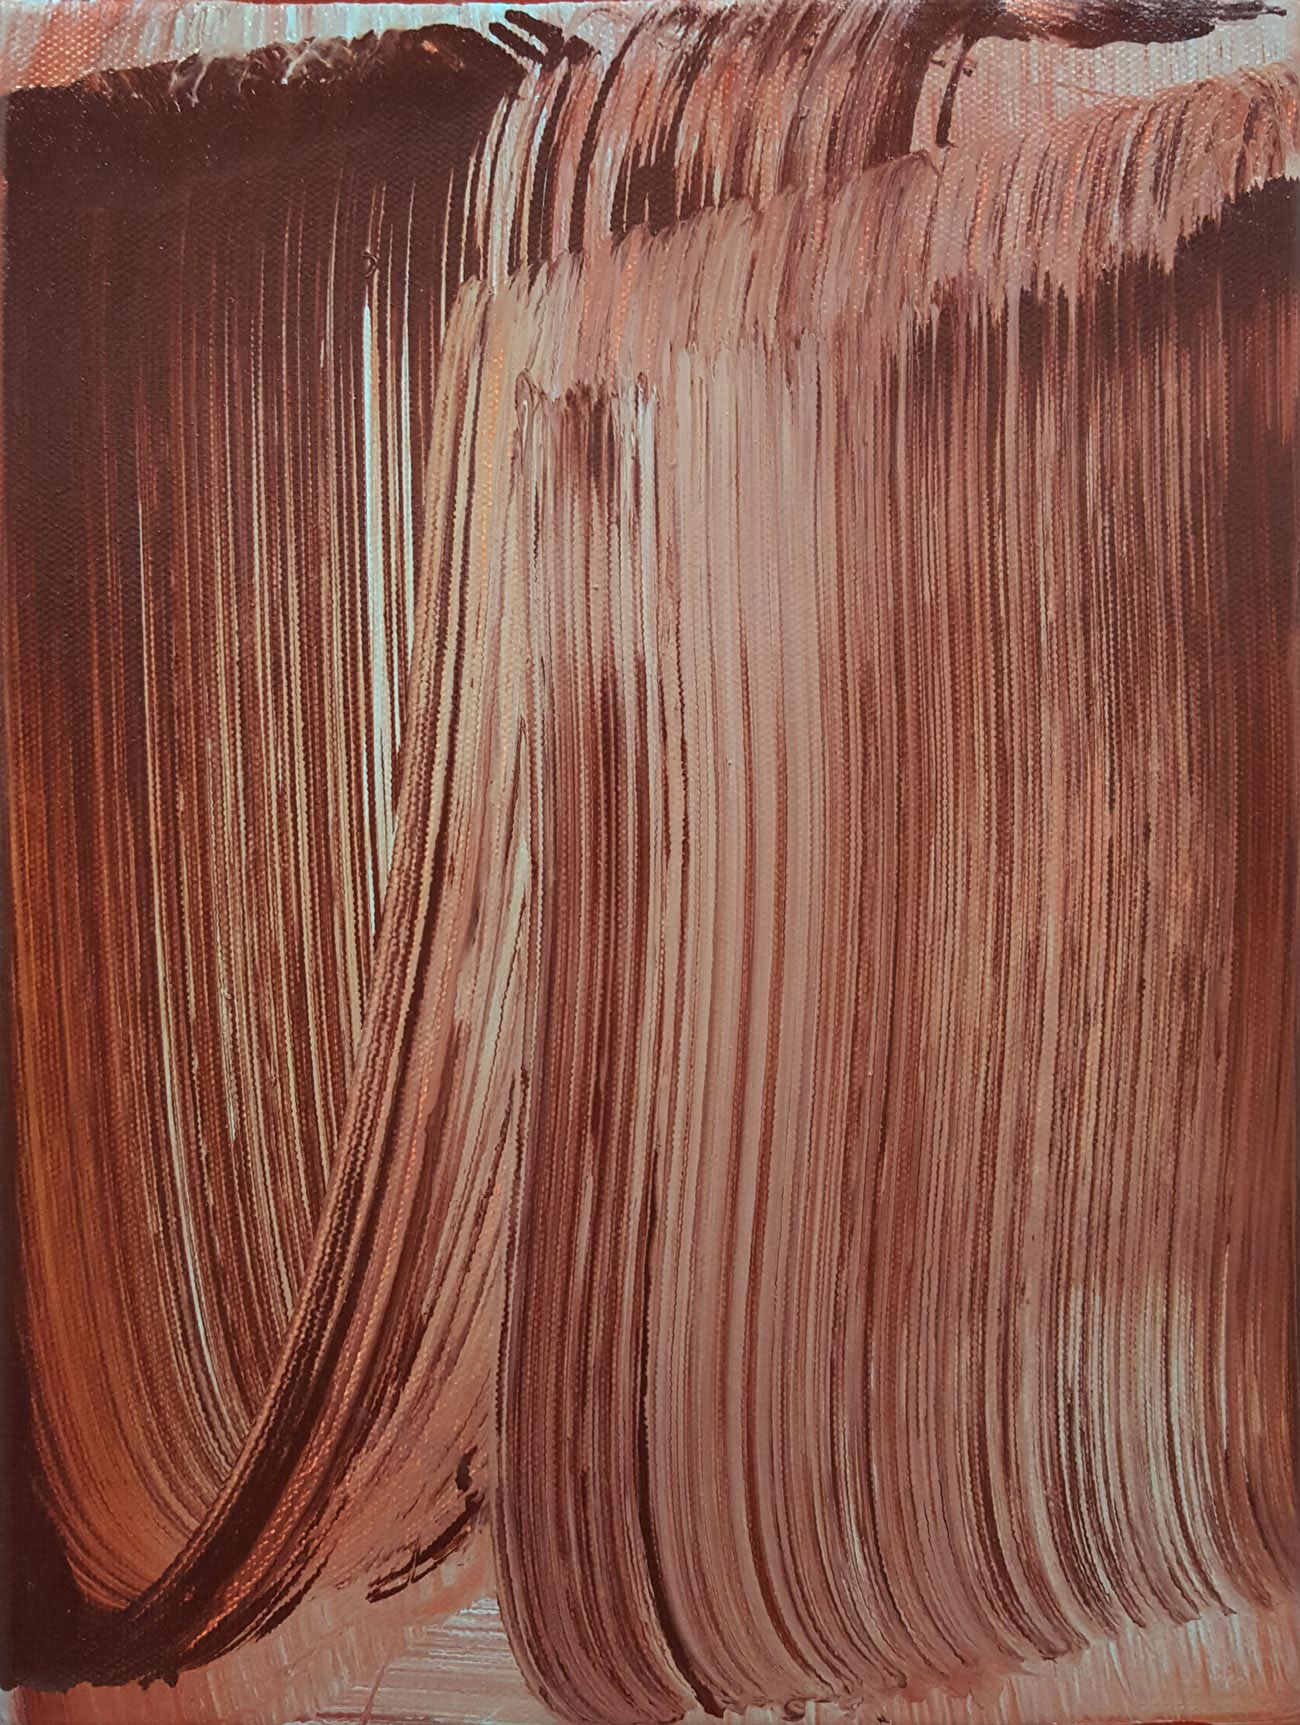   Rainy Swipe , 2015 oil on canvas 12 x 9 in. 